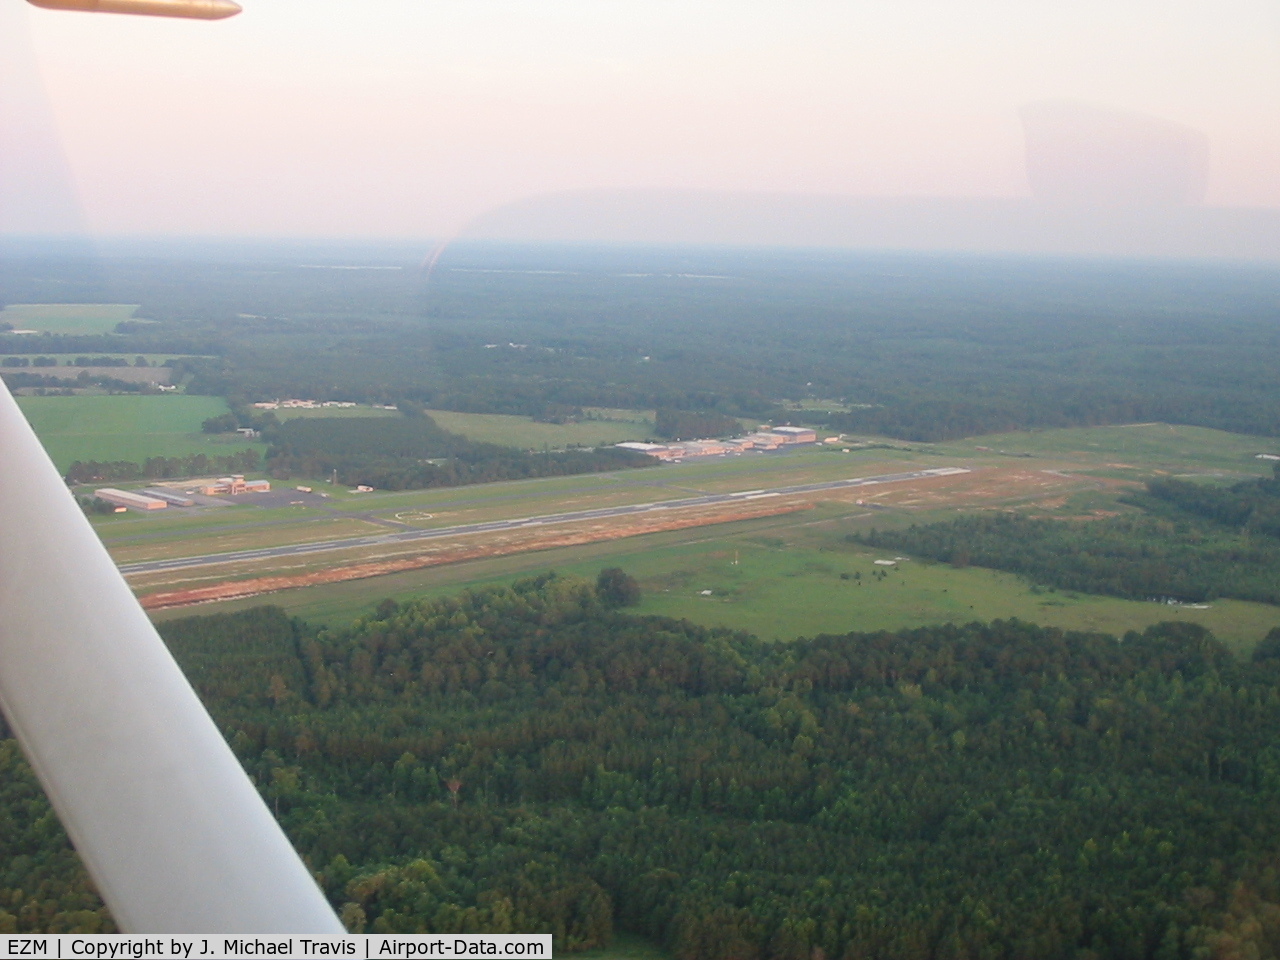 Heart Of Georgia Regional Airport (EZM) - Downwind for RWY2 at EZM. 